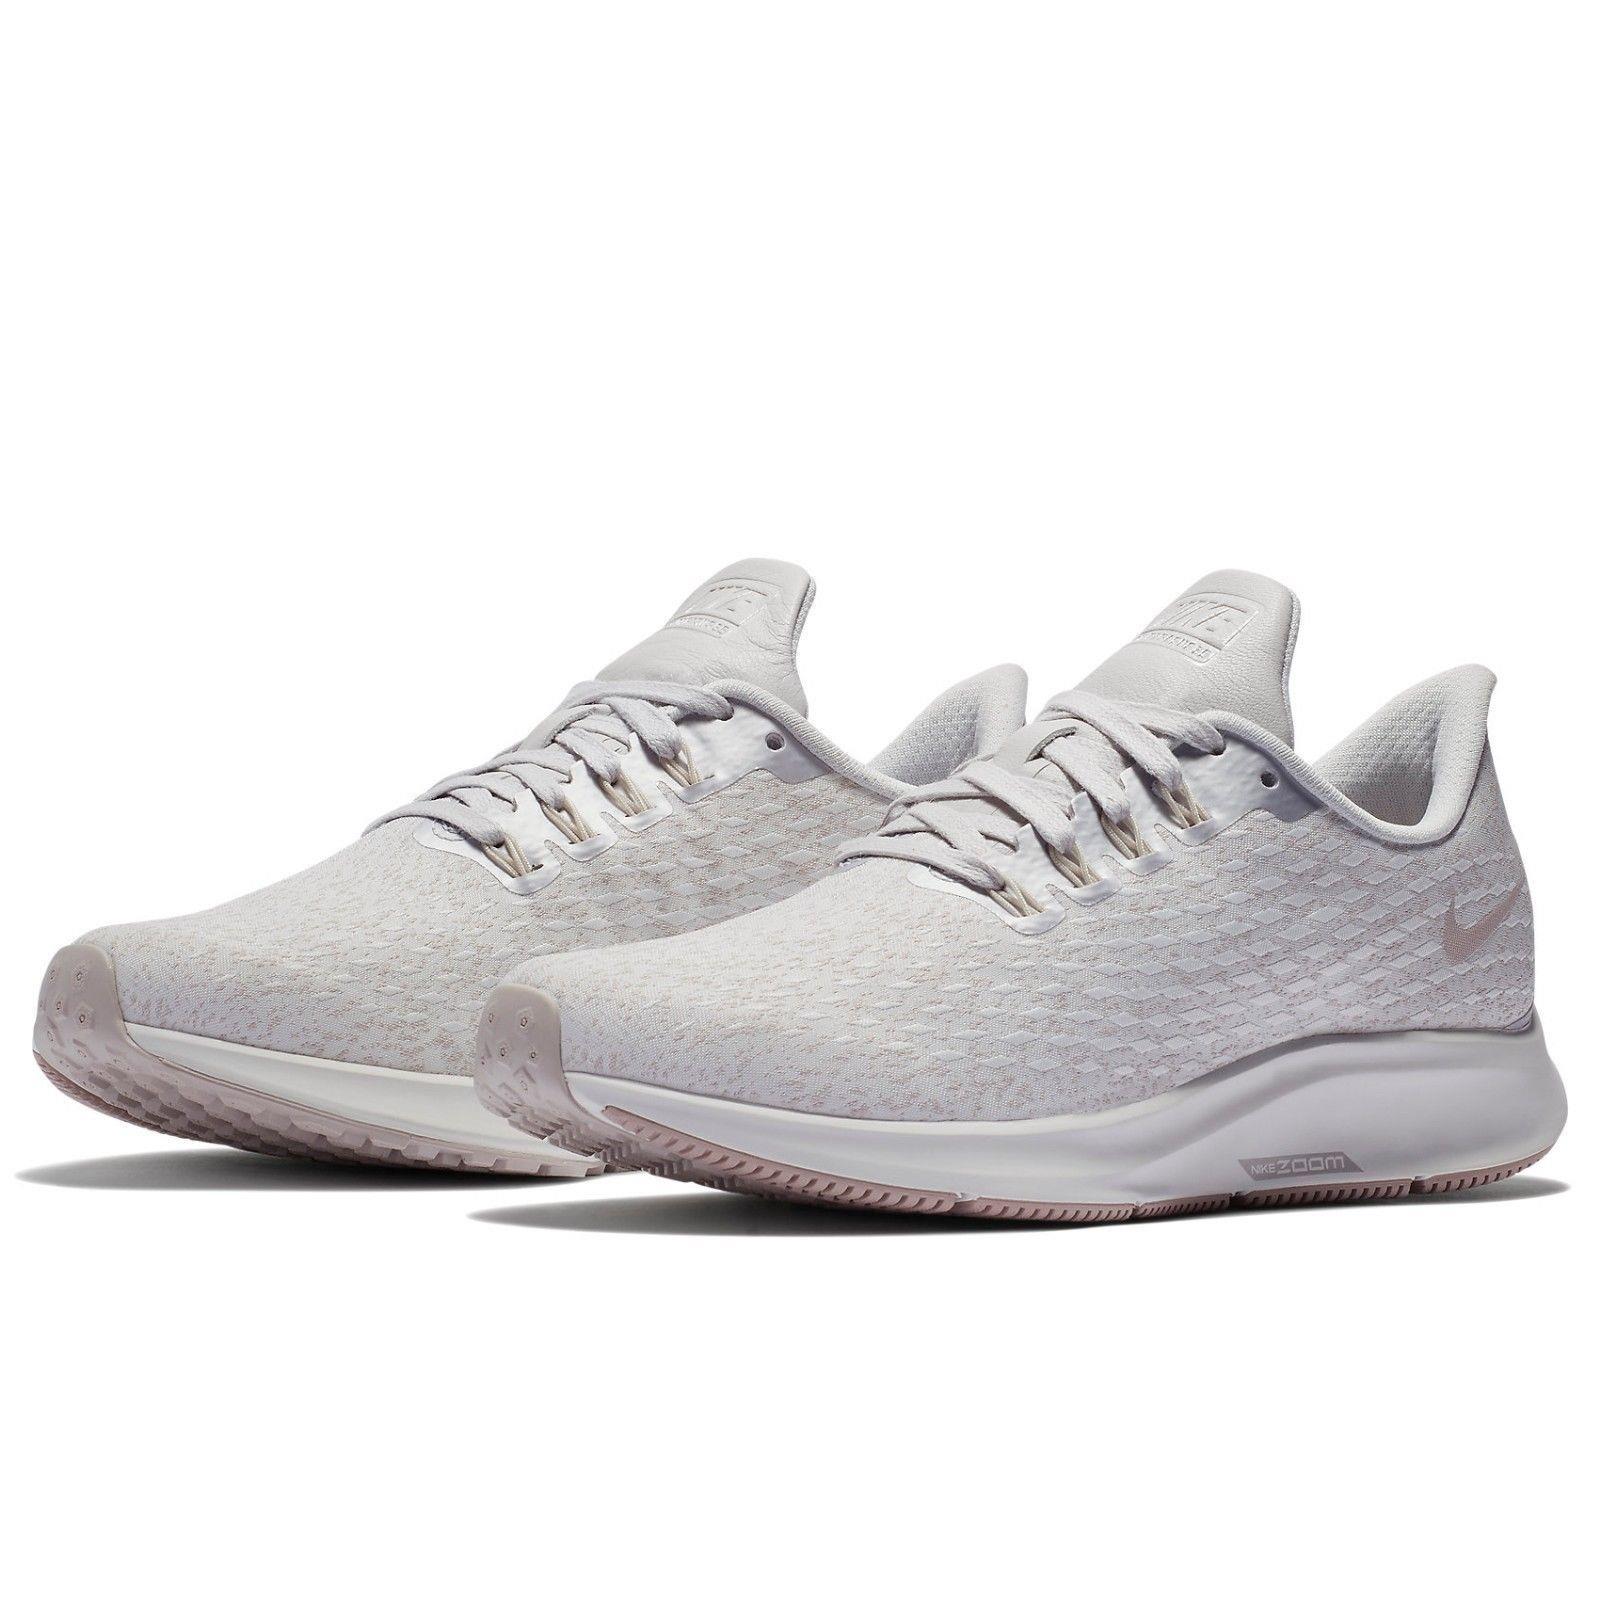 Nike Air Zoom Pegasus 35 Premium AH8392 002 Women`s Running Shoes Size 11 - Vast Grey/Summit White/Moon Particle-Wheat Gold